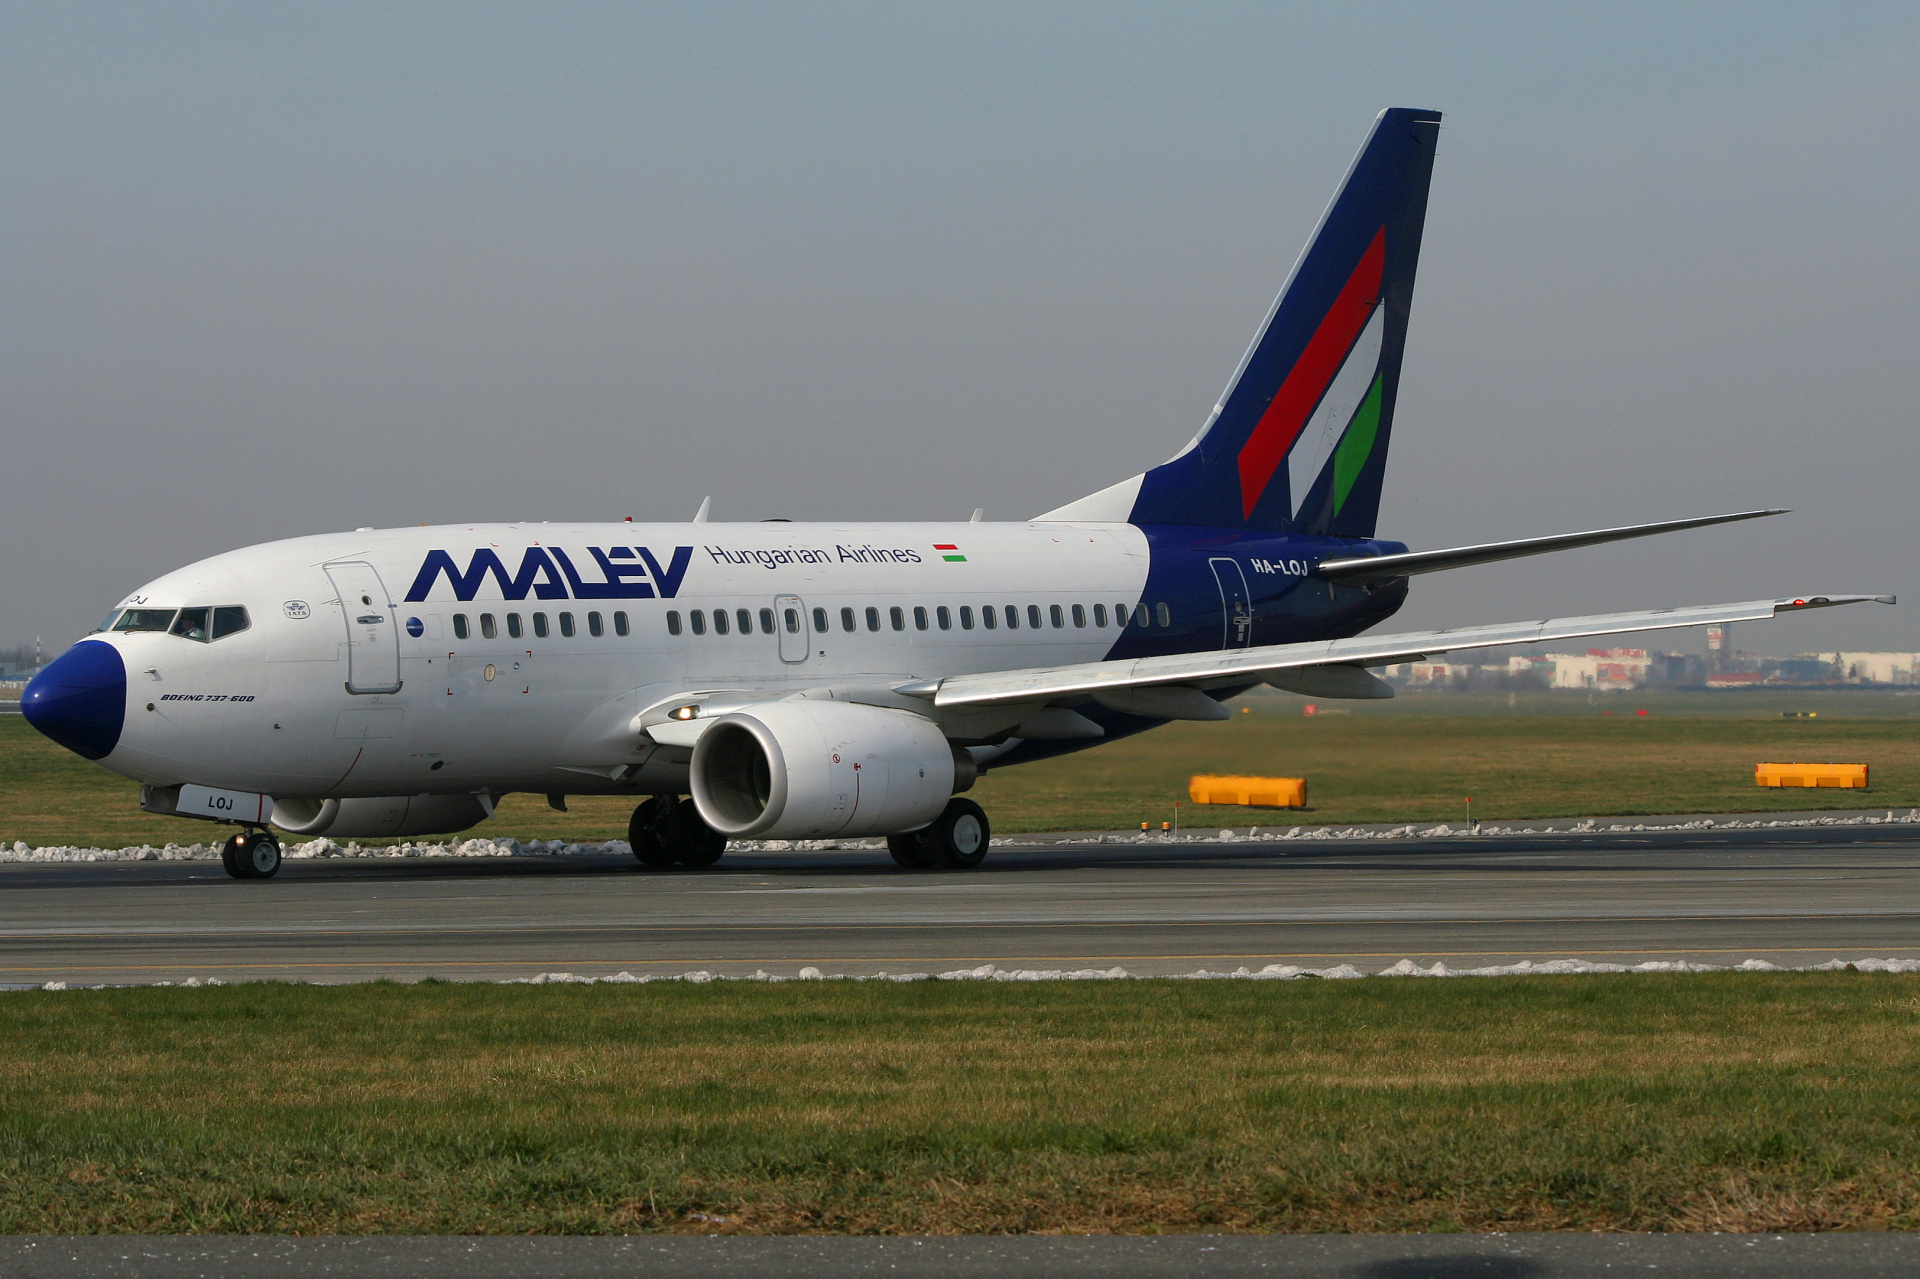 HA-LOJ, Malév Hungarian Airlines (Aircraft » EPWA Spotting » Boeing 737-600)